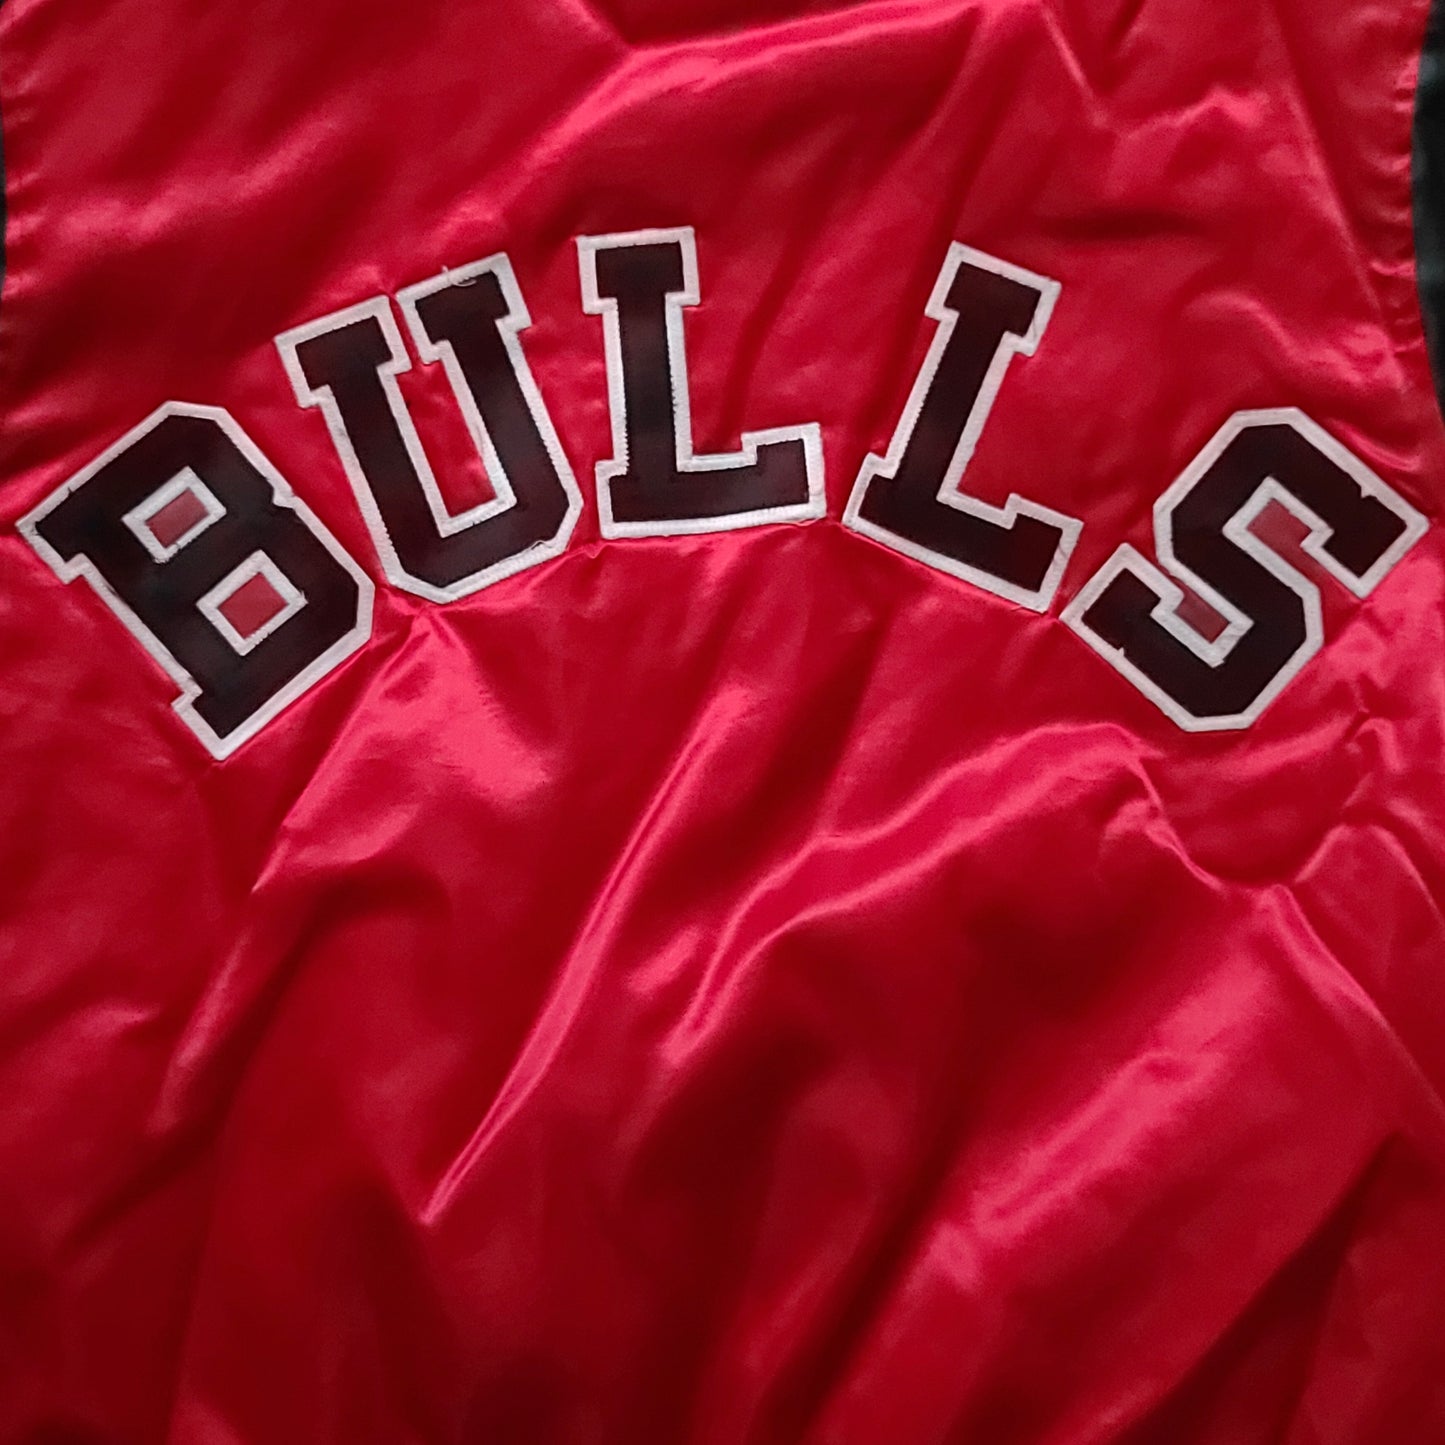 Vintage Chicago Bulls Chalkline Red Black Satin Jacket